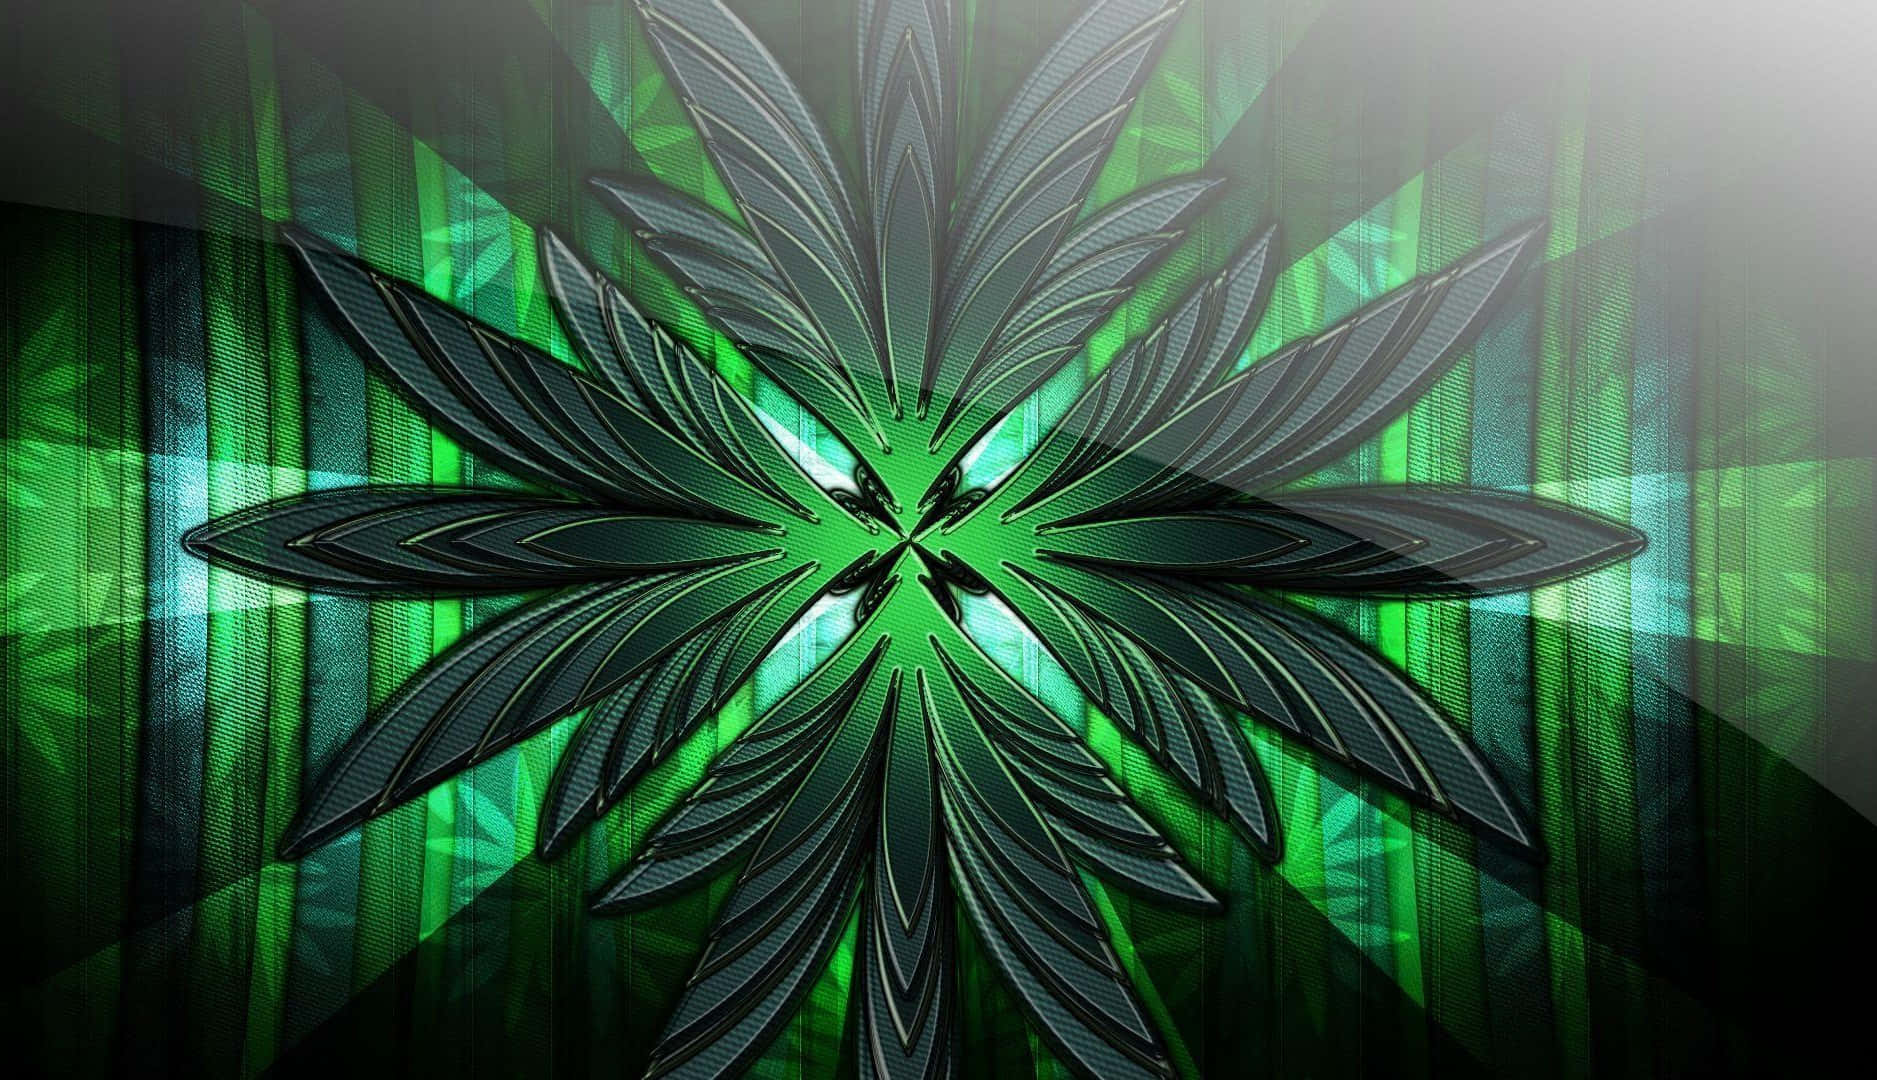 Abstract Floral Digital Art Wallpaper